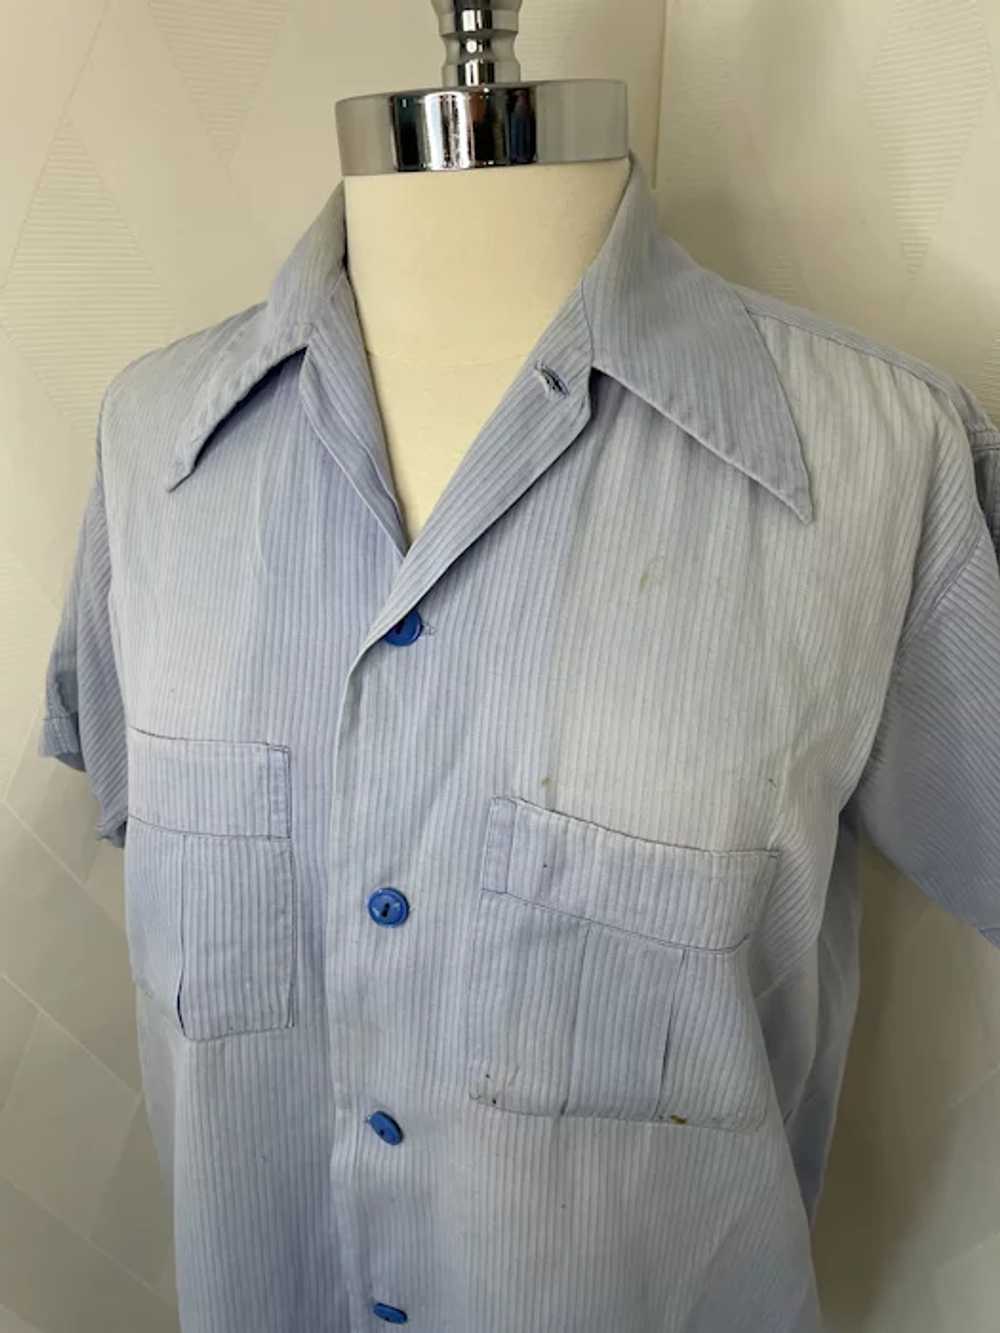 Vintage 1940s Airman Blue Pinstripe Uniform Shirt - image 3